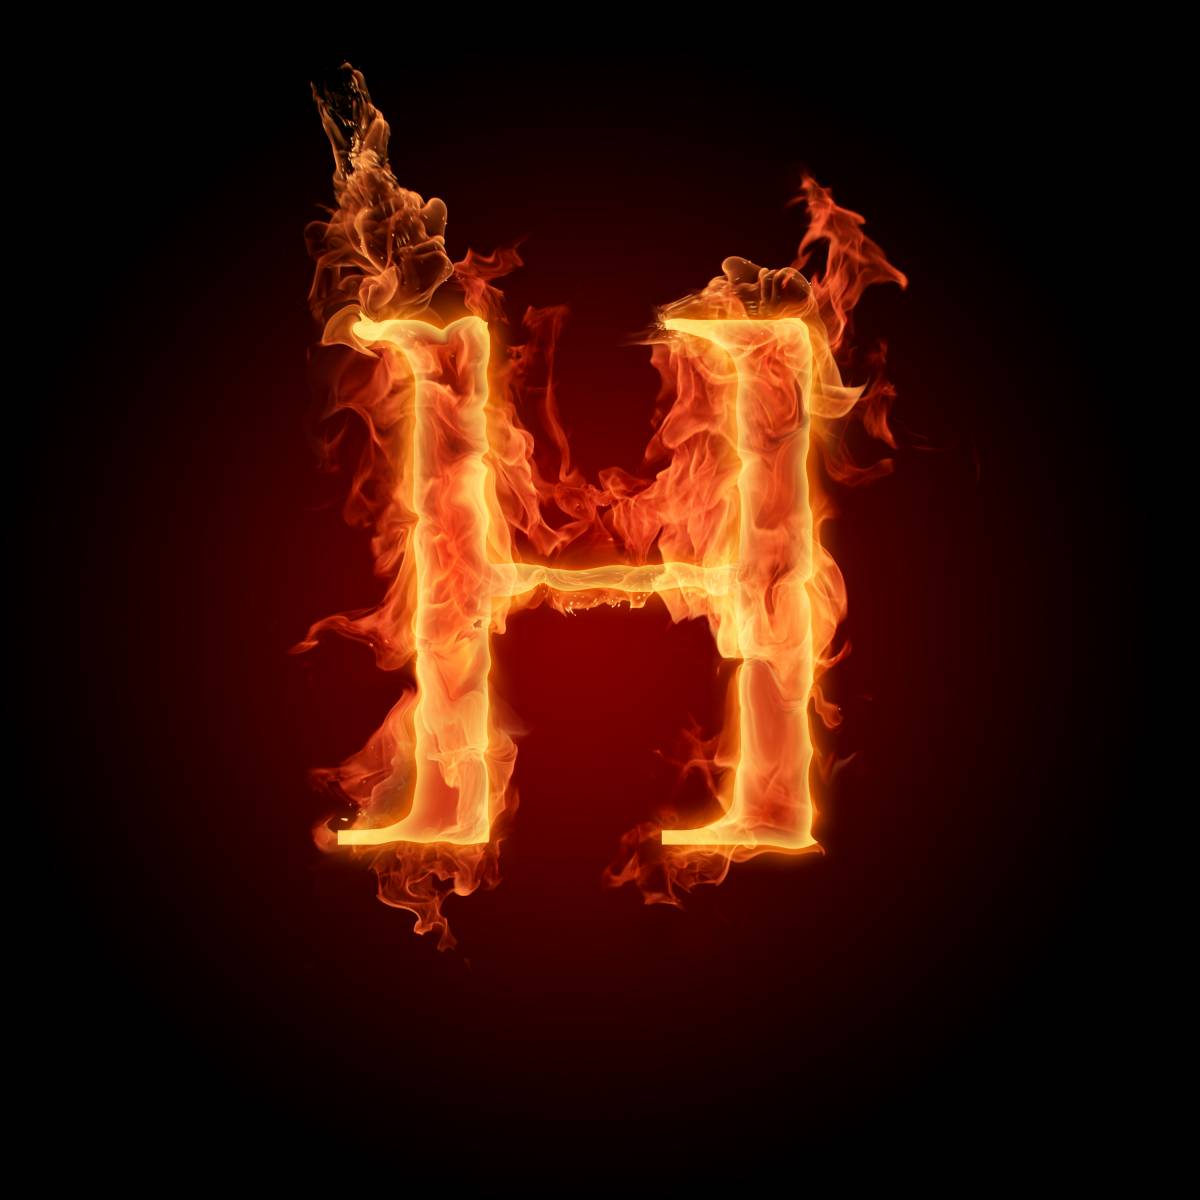 Буква H огненная HD фото картинки, обои рабочий стол